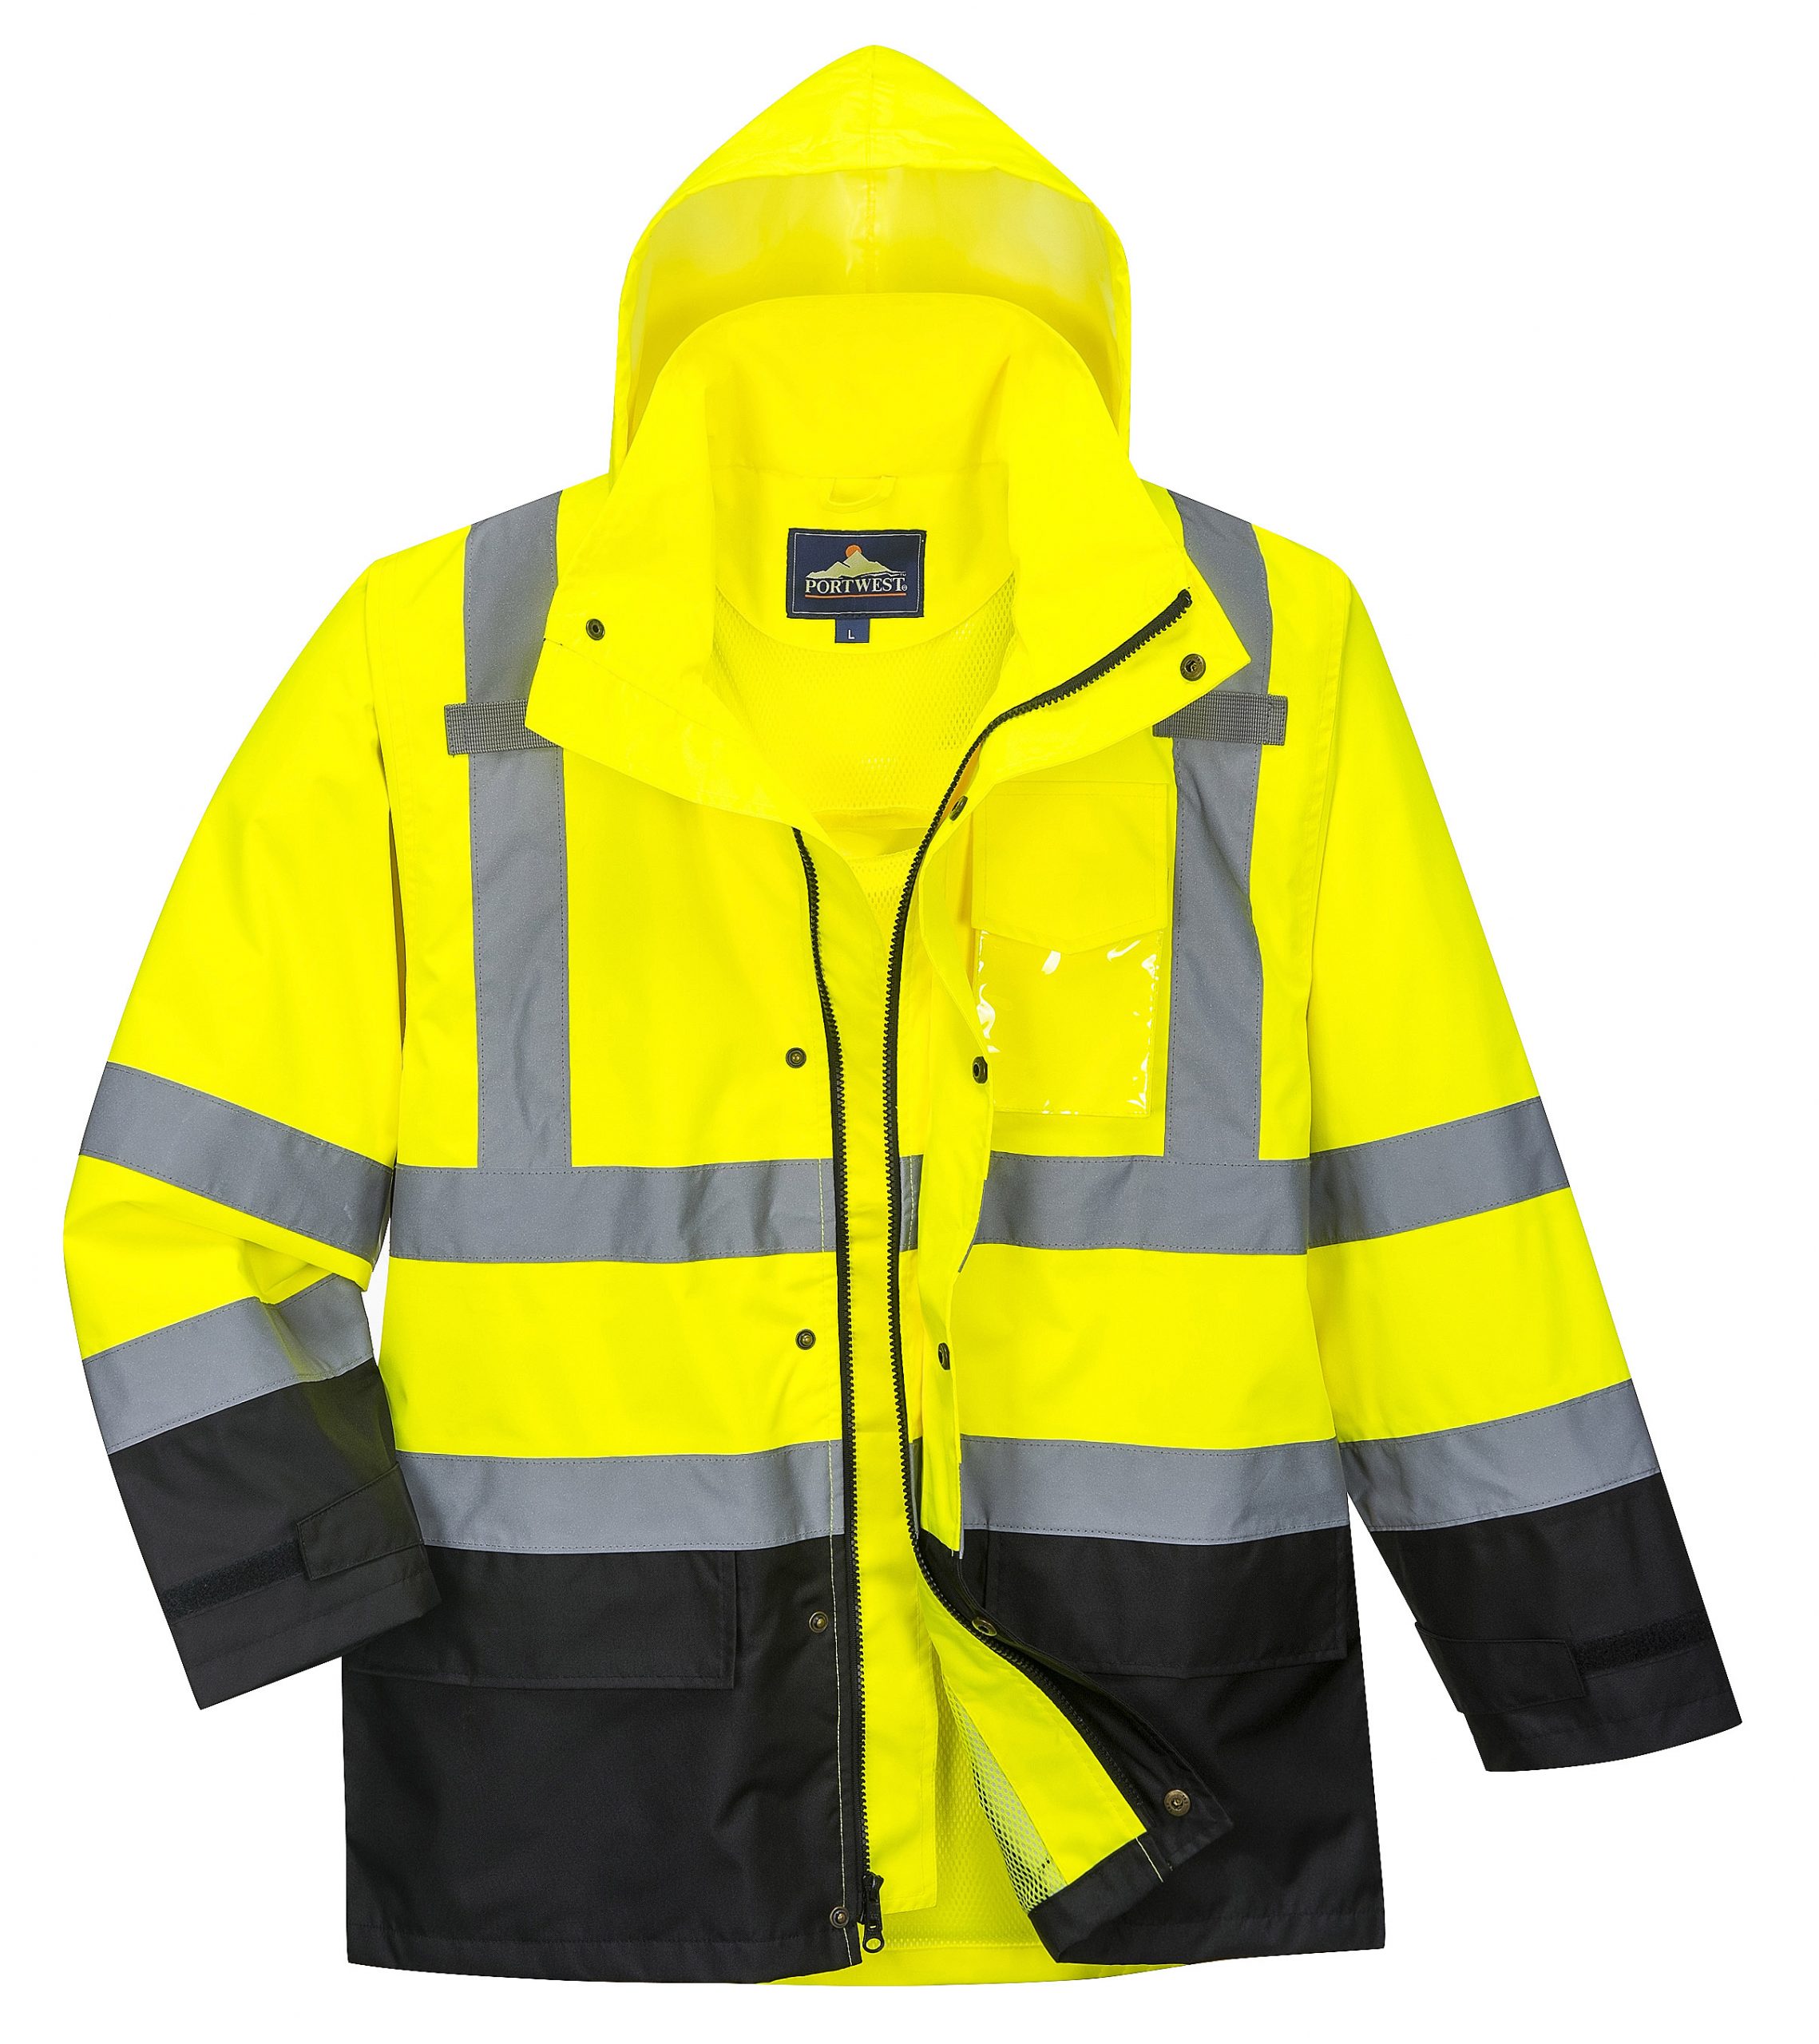 US366 High Visibility Rain Jacket, Yellow/Black - Portwest 